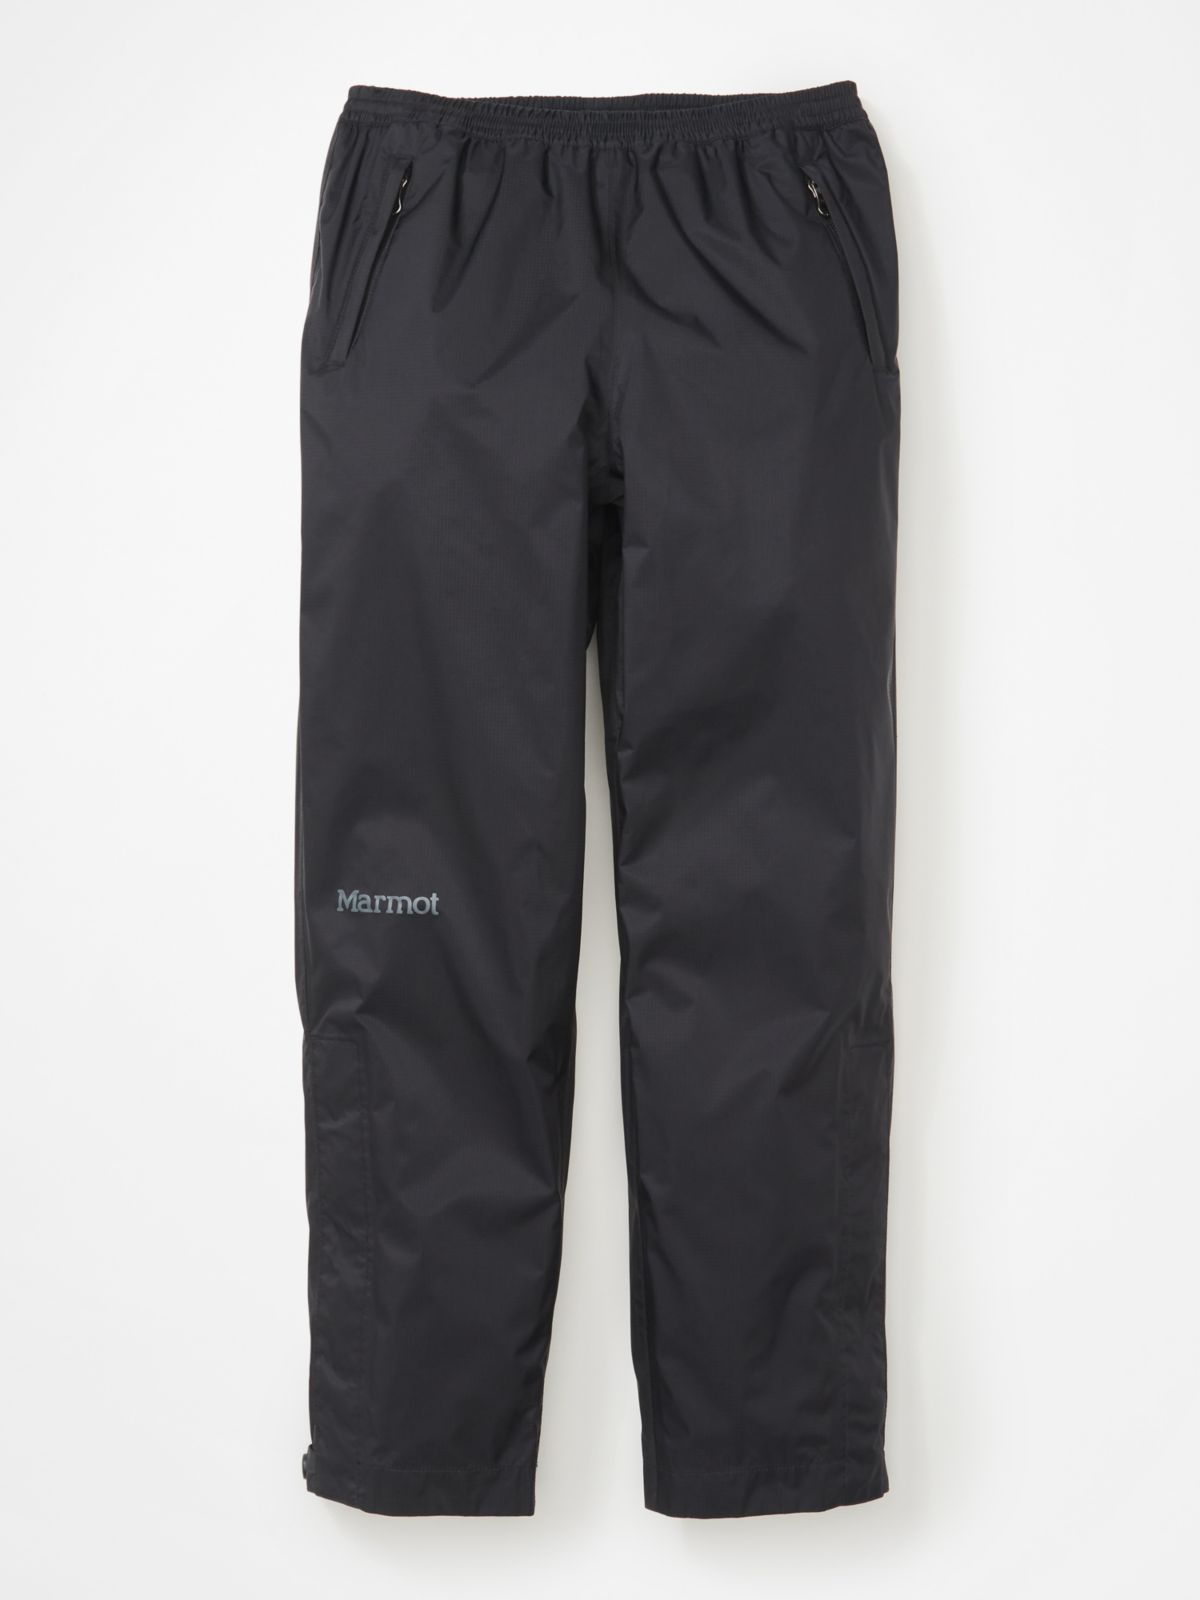 Black ski pants